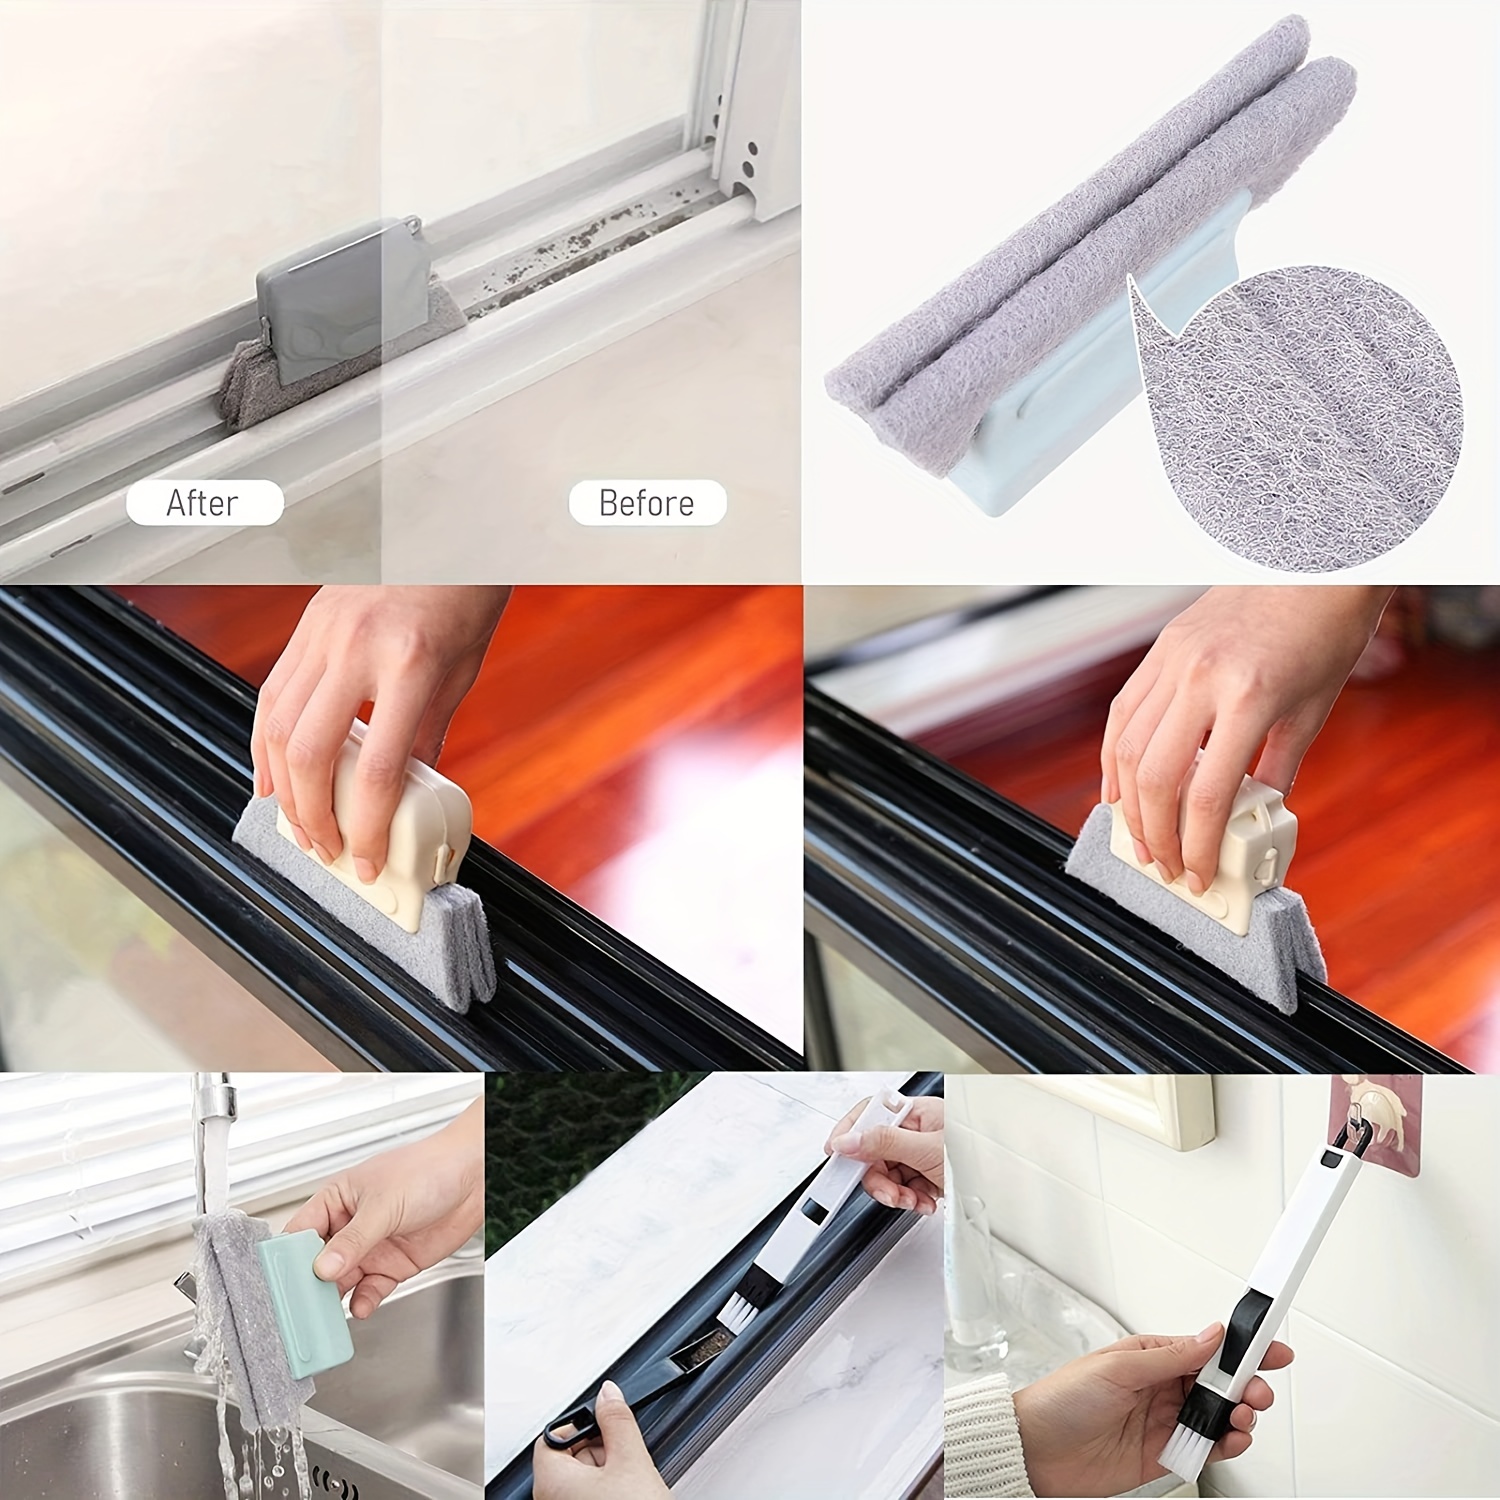 5pcs Magic Window Cleaning Brush, Window Groove Cleaning Brush, Window Cleaning Brush, Crevice Cleaning Tool, Magic Gap Cleaning Brush, Window Track